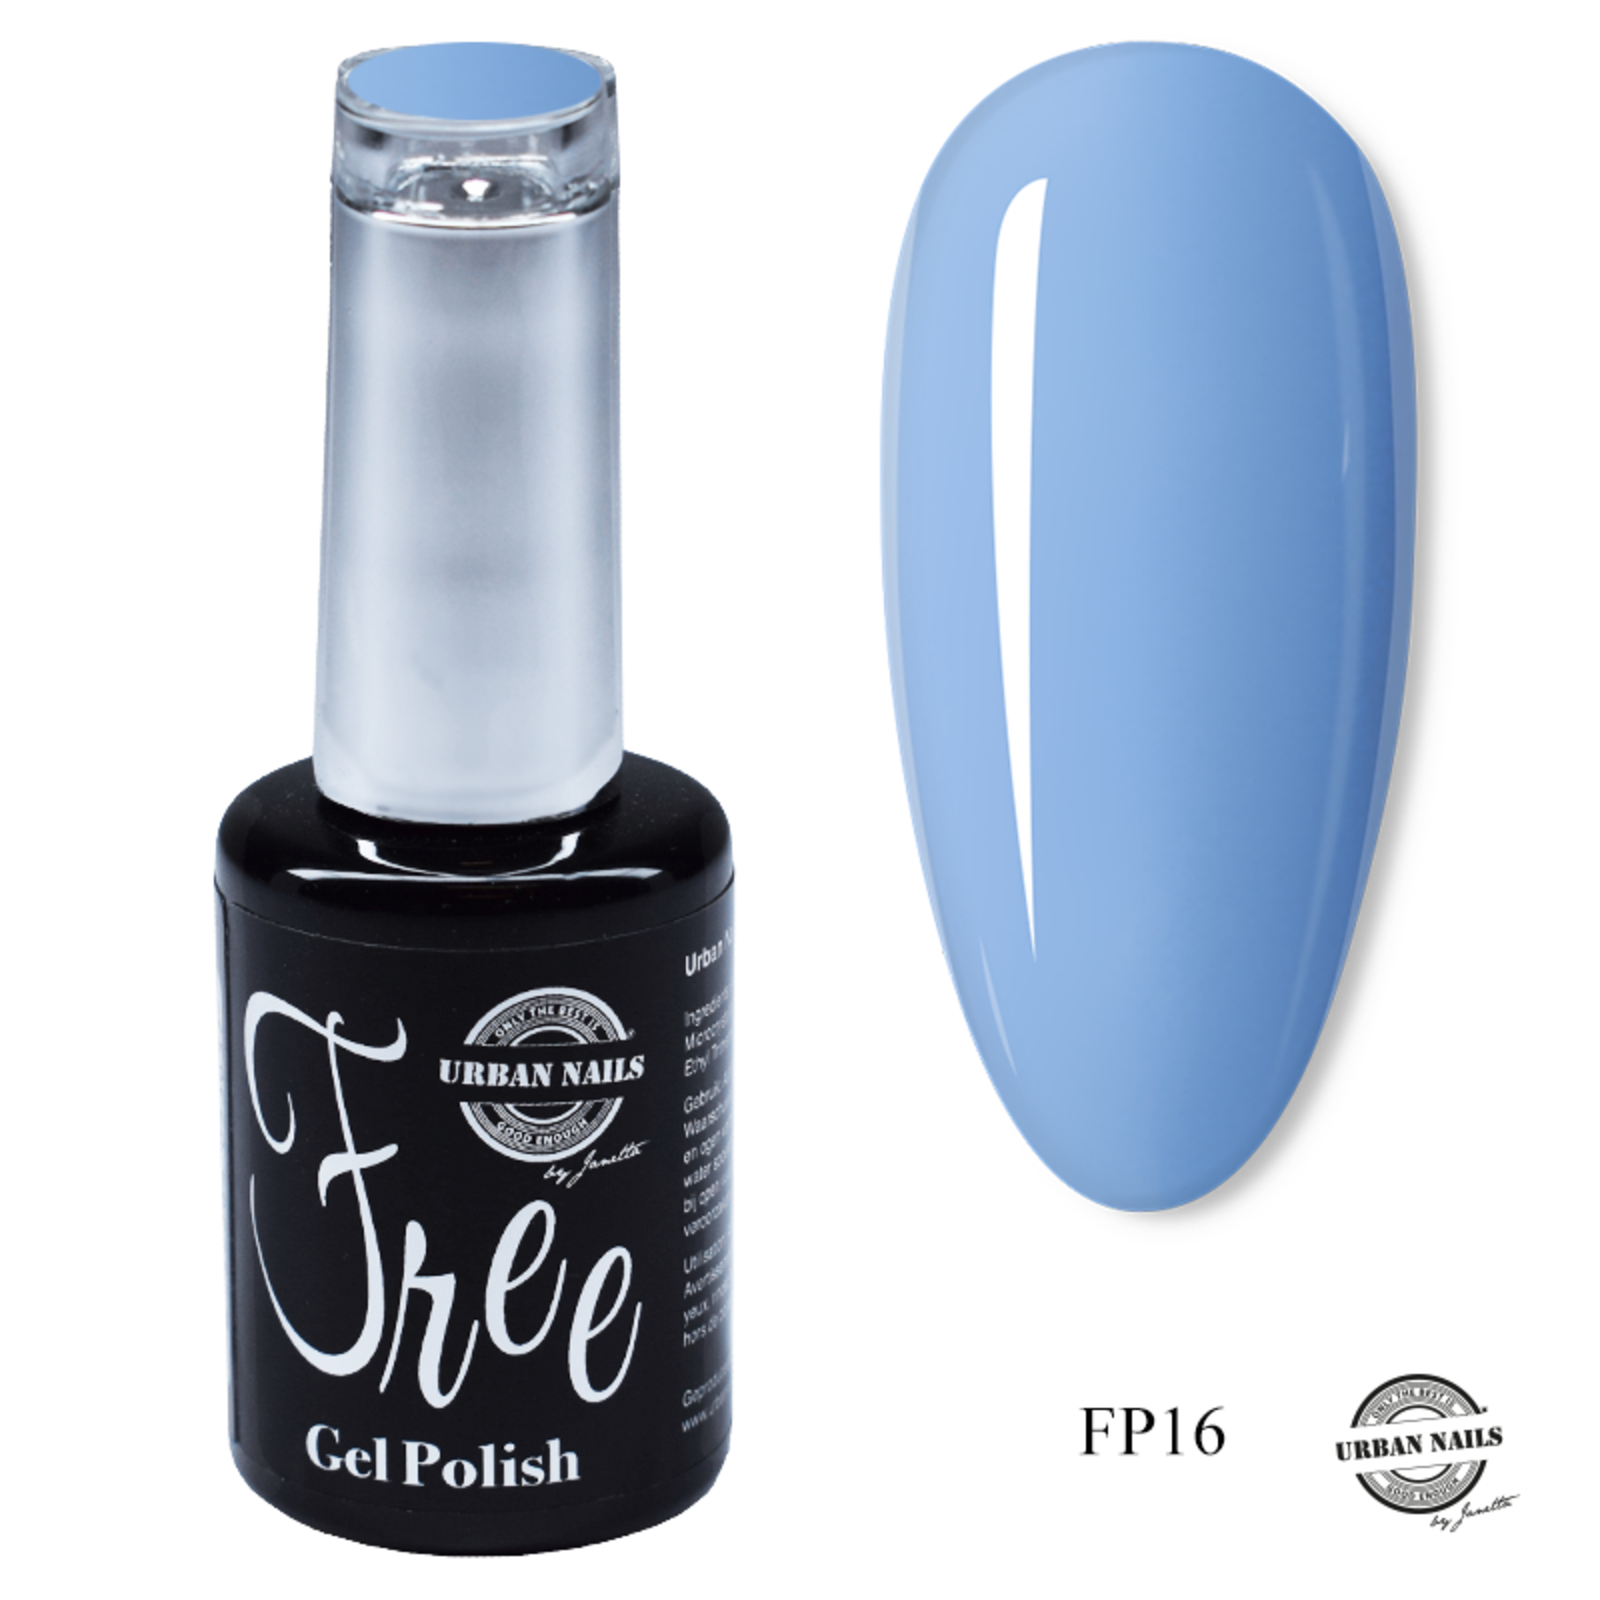 Urban nails Free Gelpolish FP16